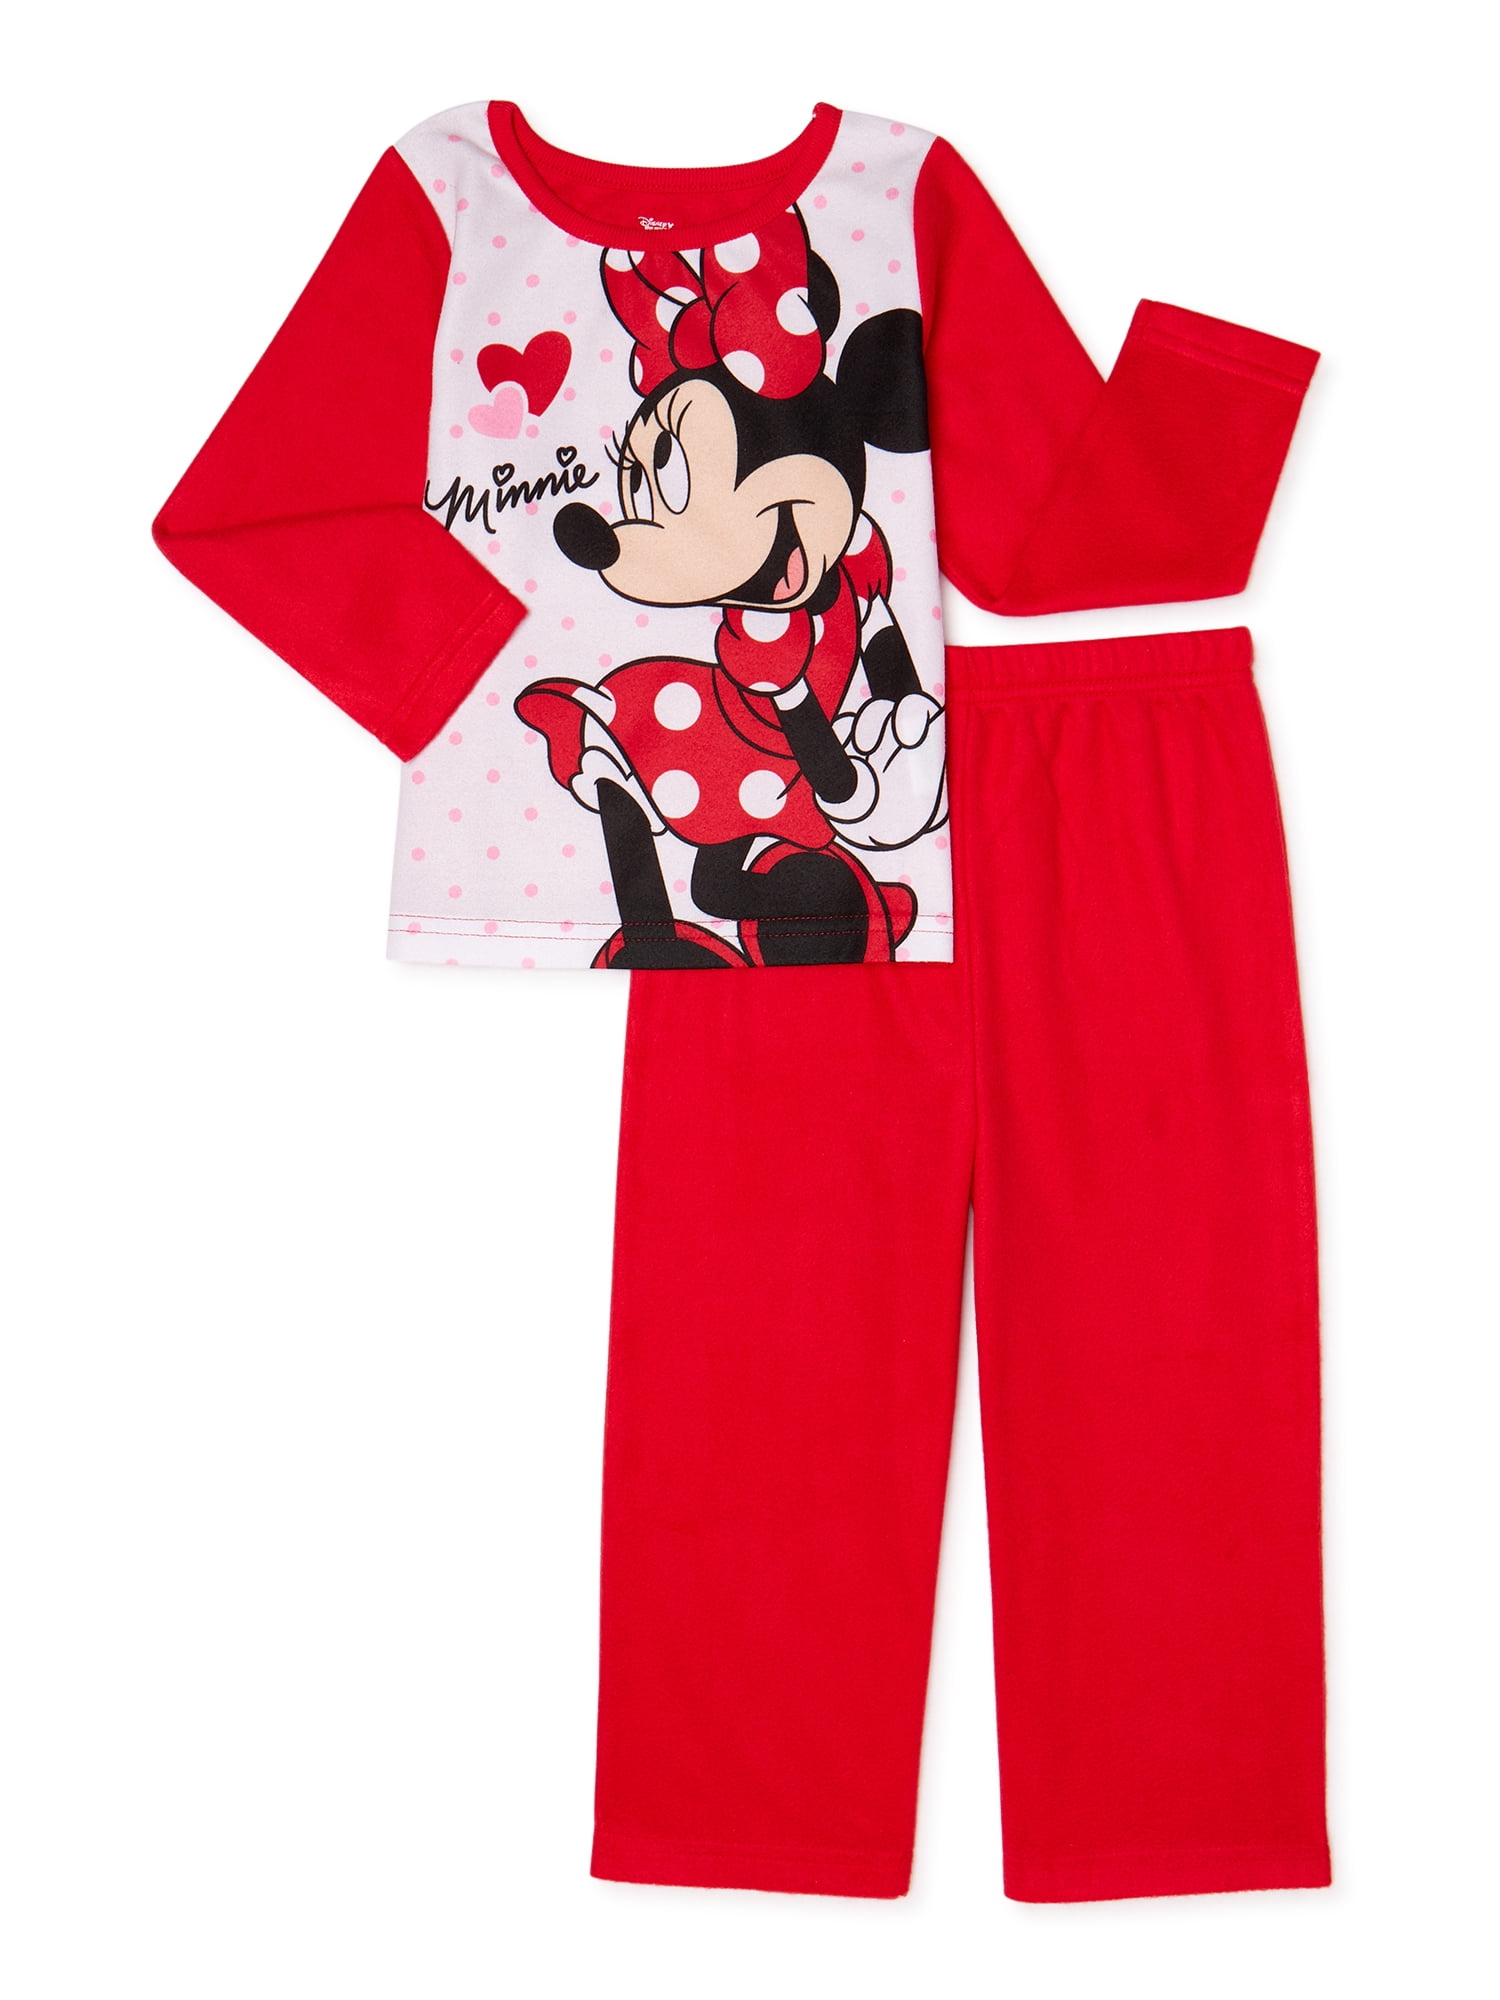 Disney Junior Minnie Mouse pajamas 2 piece Brand new Super cute  2T  $32 value